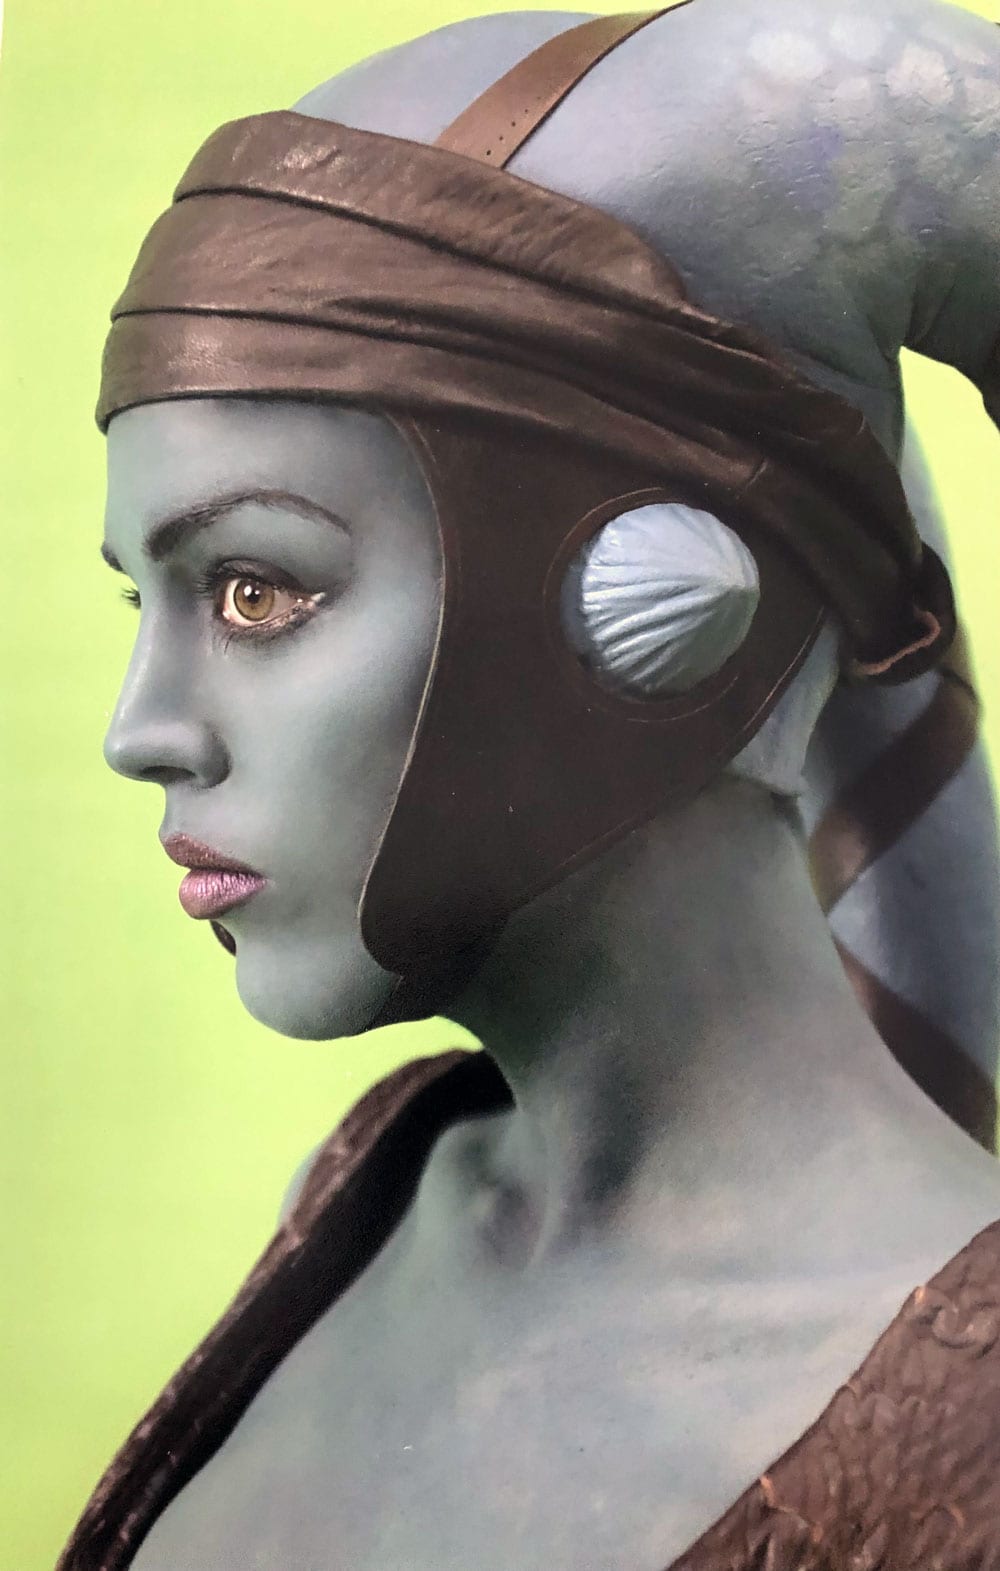 Aayla Secura (Amy Allen) makeup photo shoot - Lucasfilm Ltd.